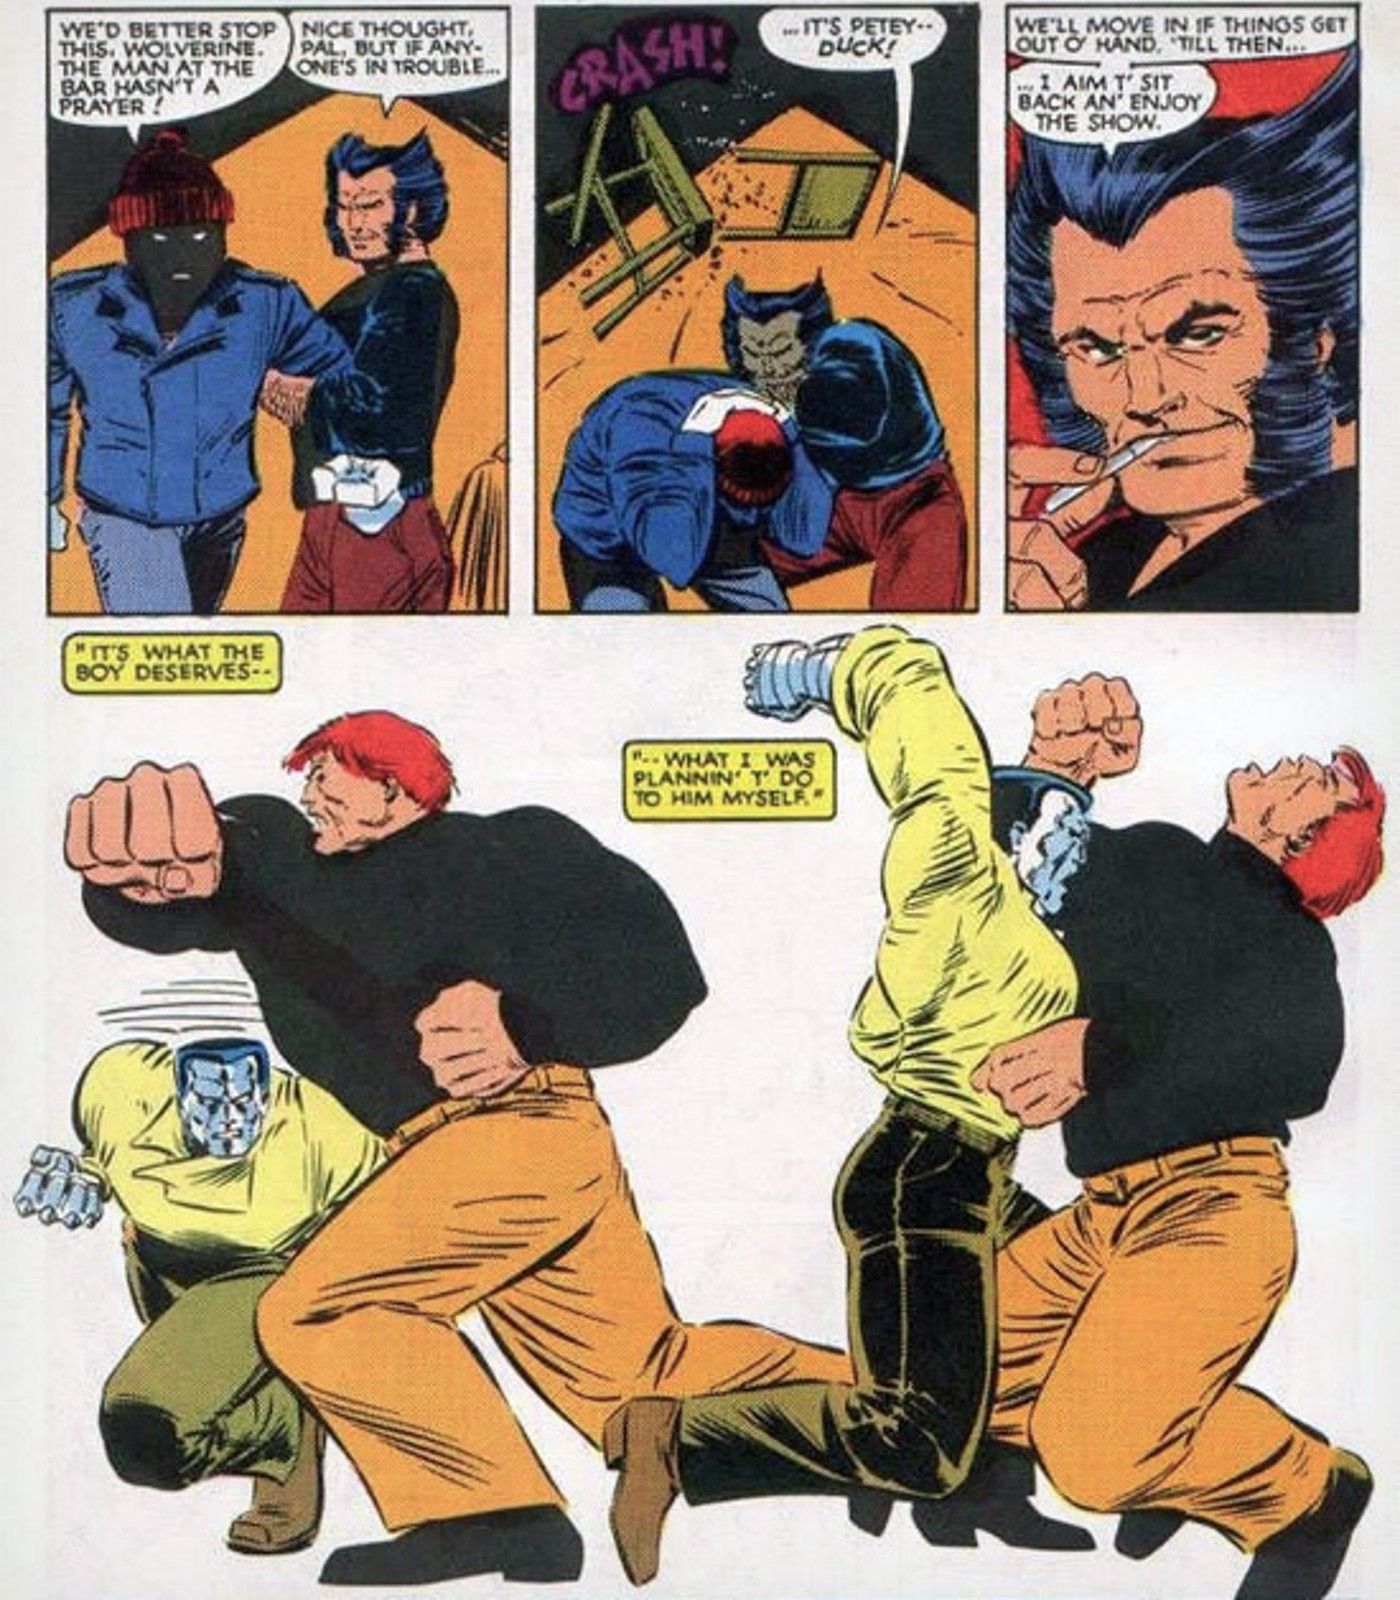 Wolverine watches X-Men's Colossus fight Juggernaut